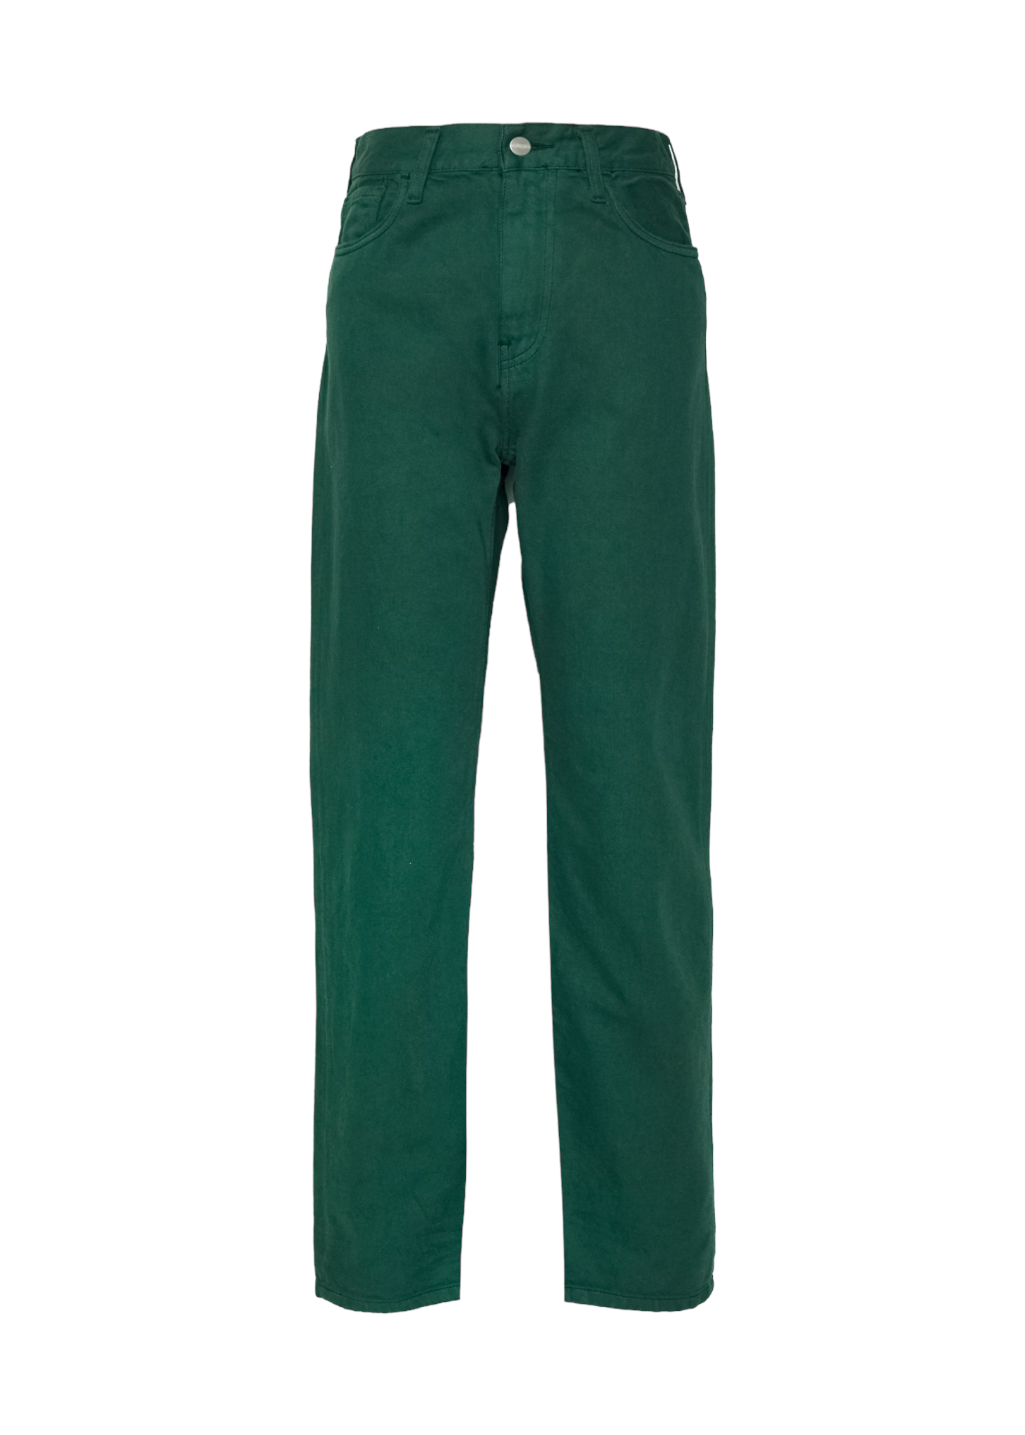 Carhartt WIP Jura Green Collins Pants